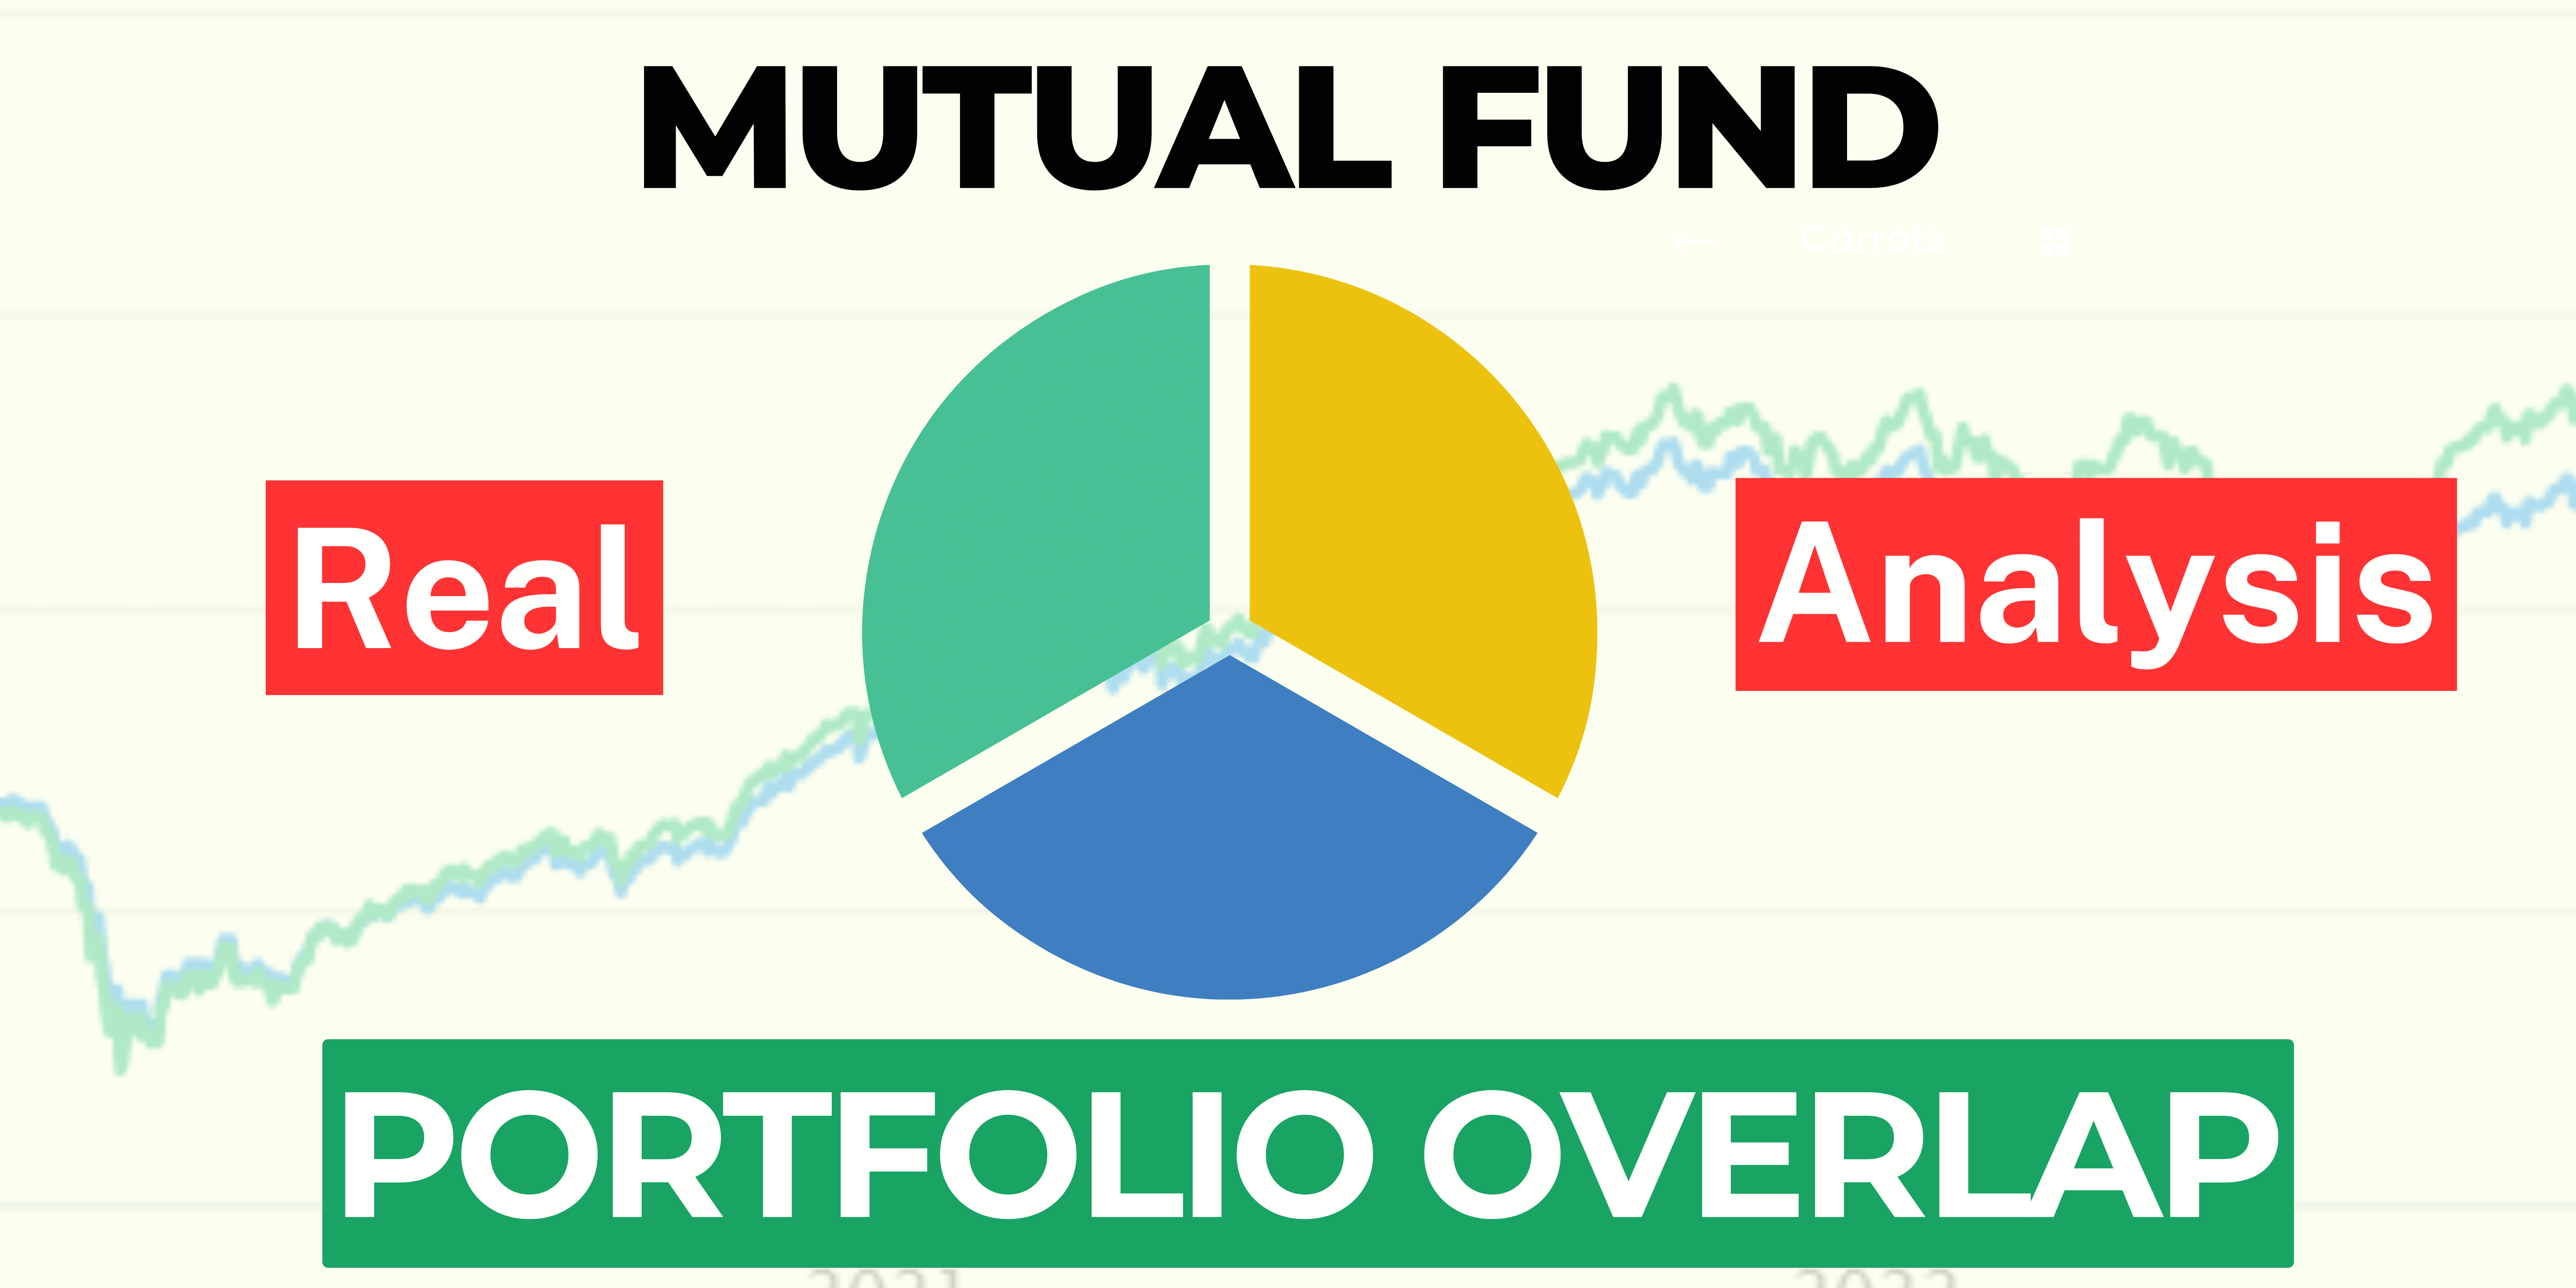 Mutual Fund Portfolio Overlap in Mutual Funds